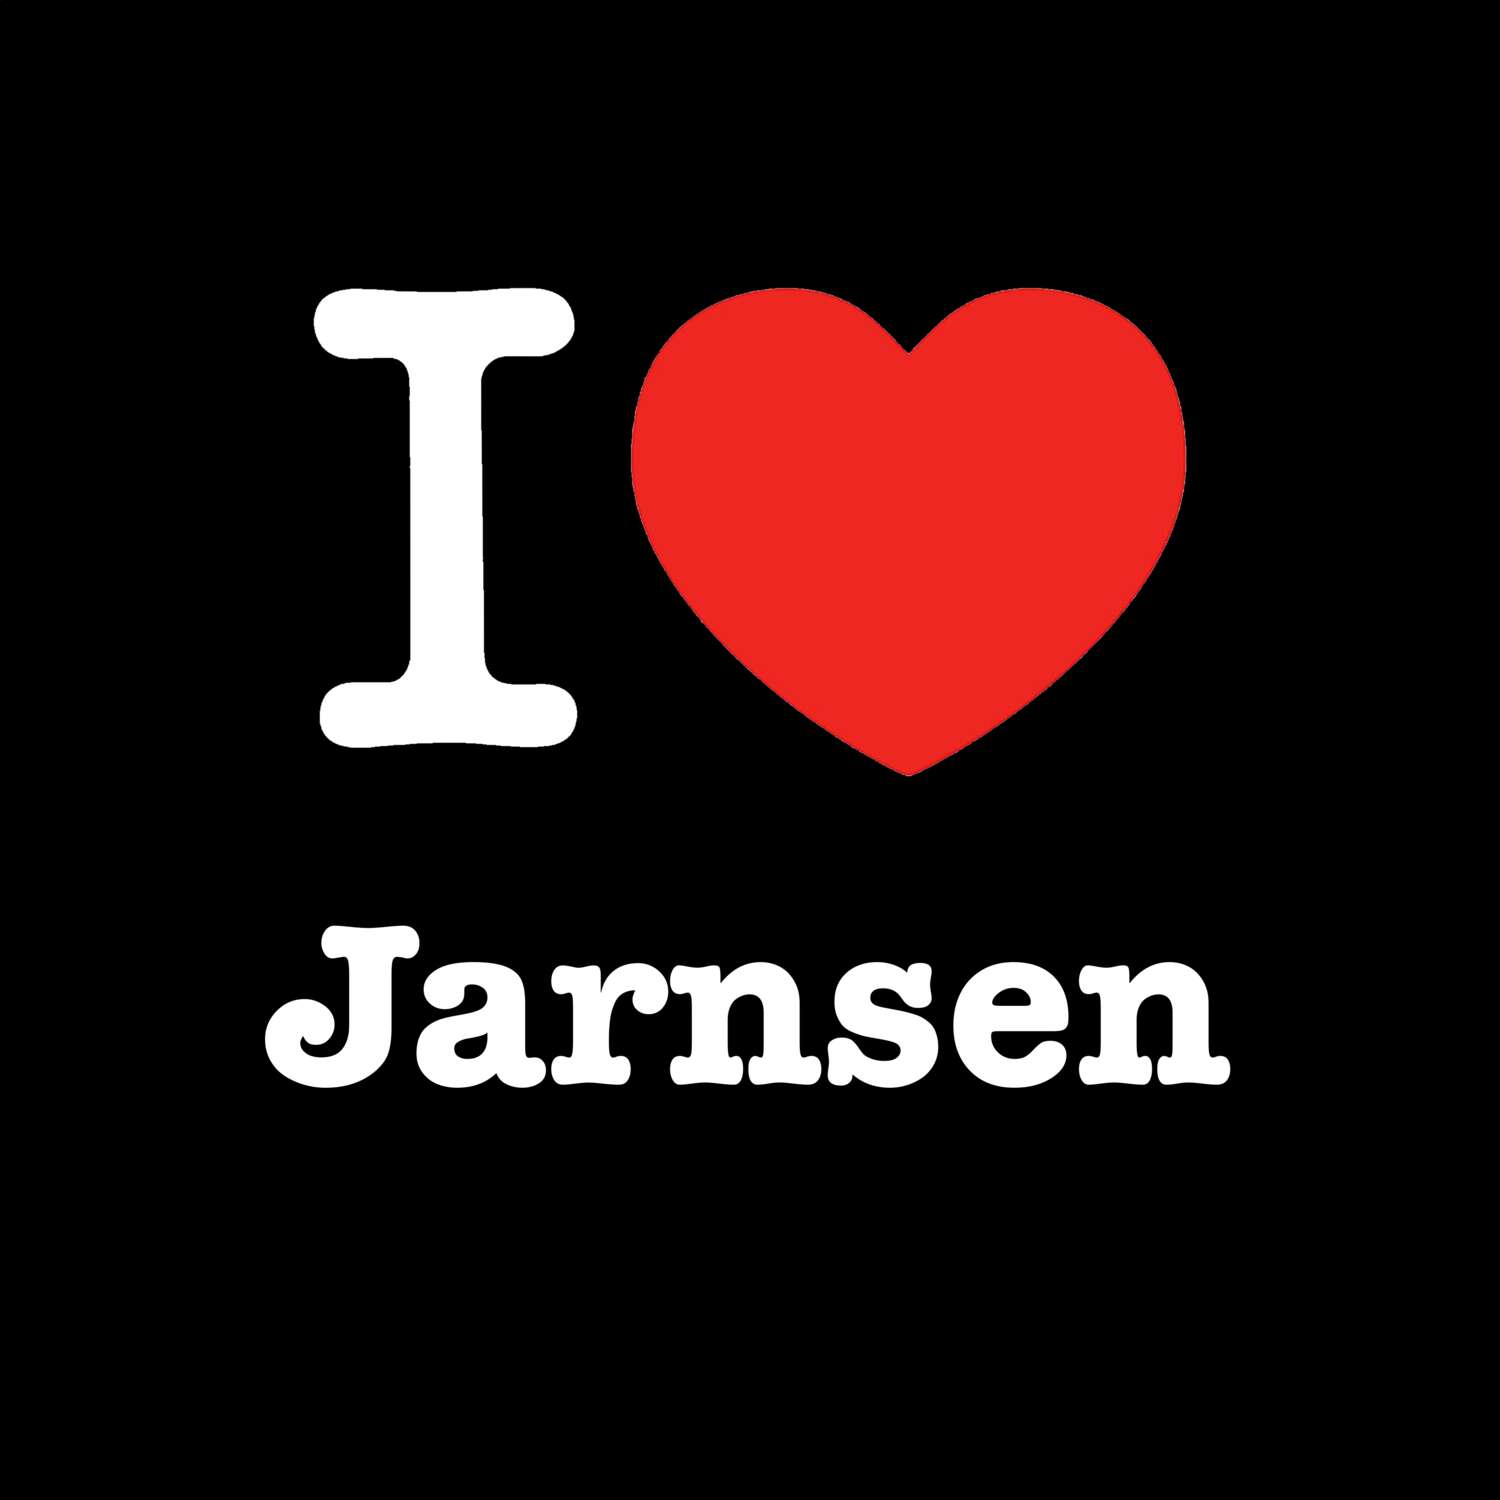 Jarnsen T-Shirt »I love«